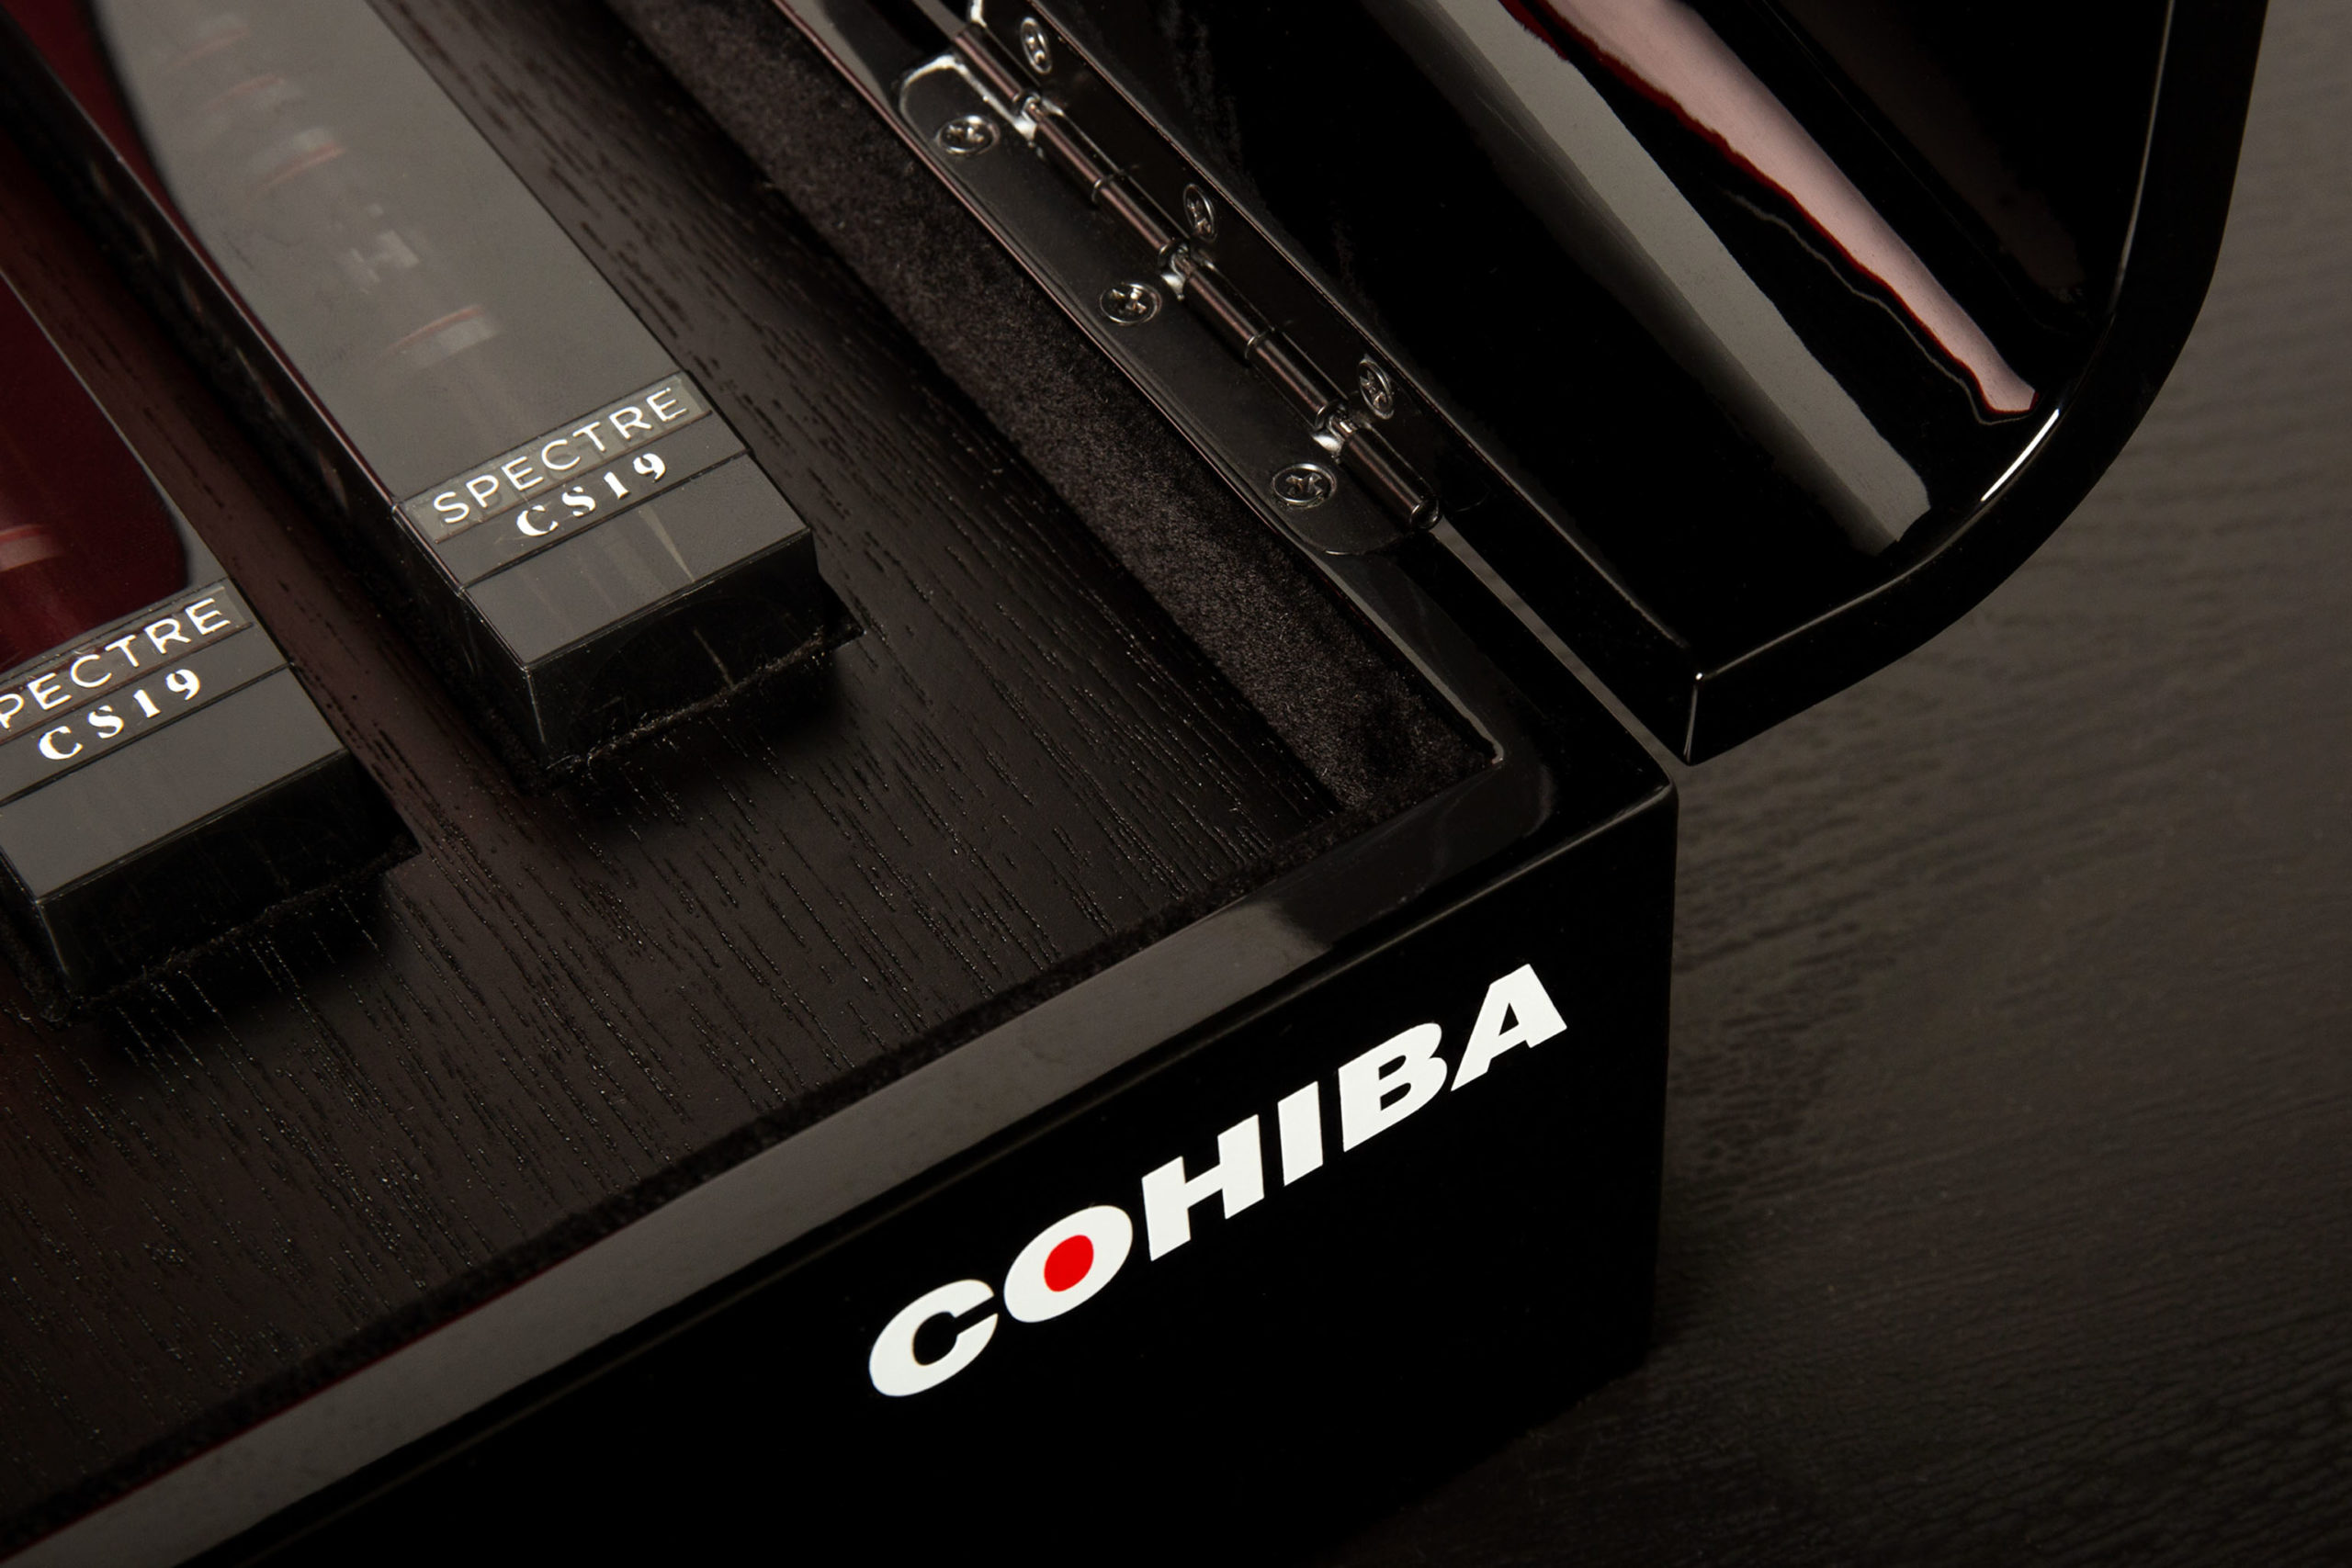 Cohiba Spectre Detail - Outer Box
